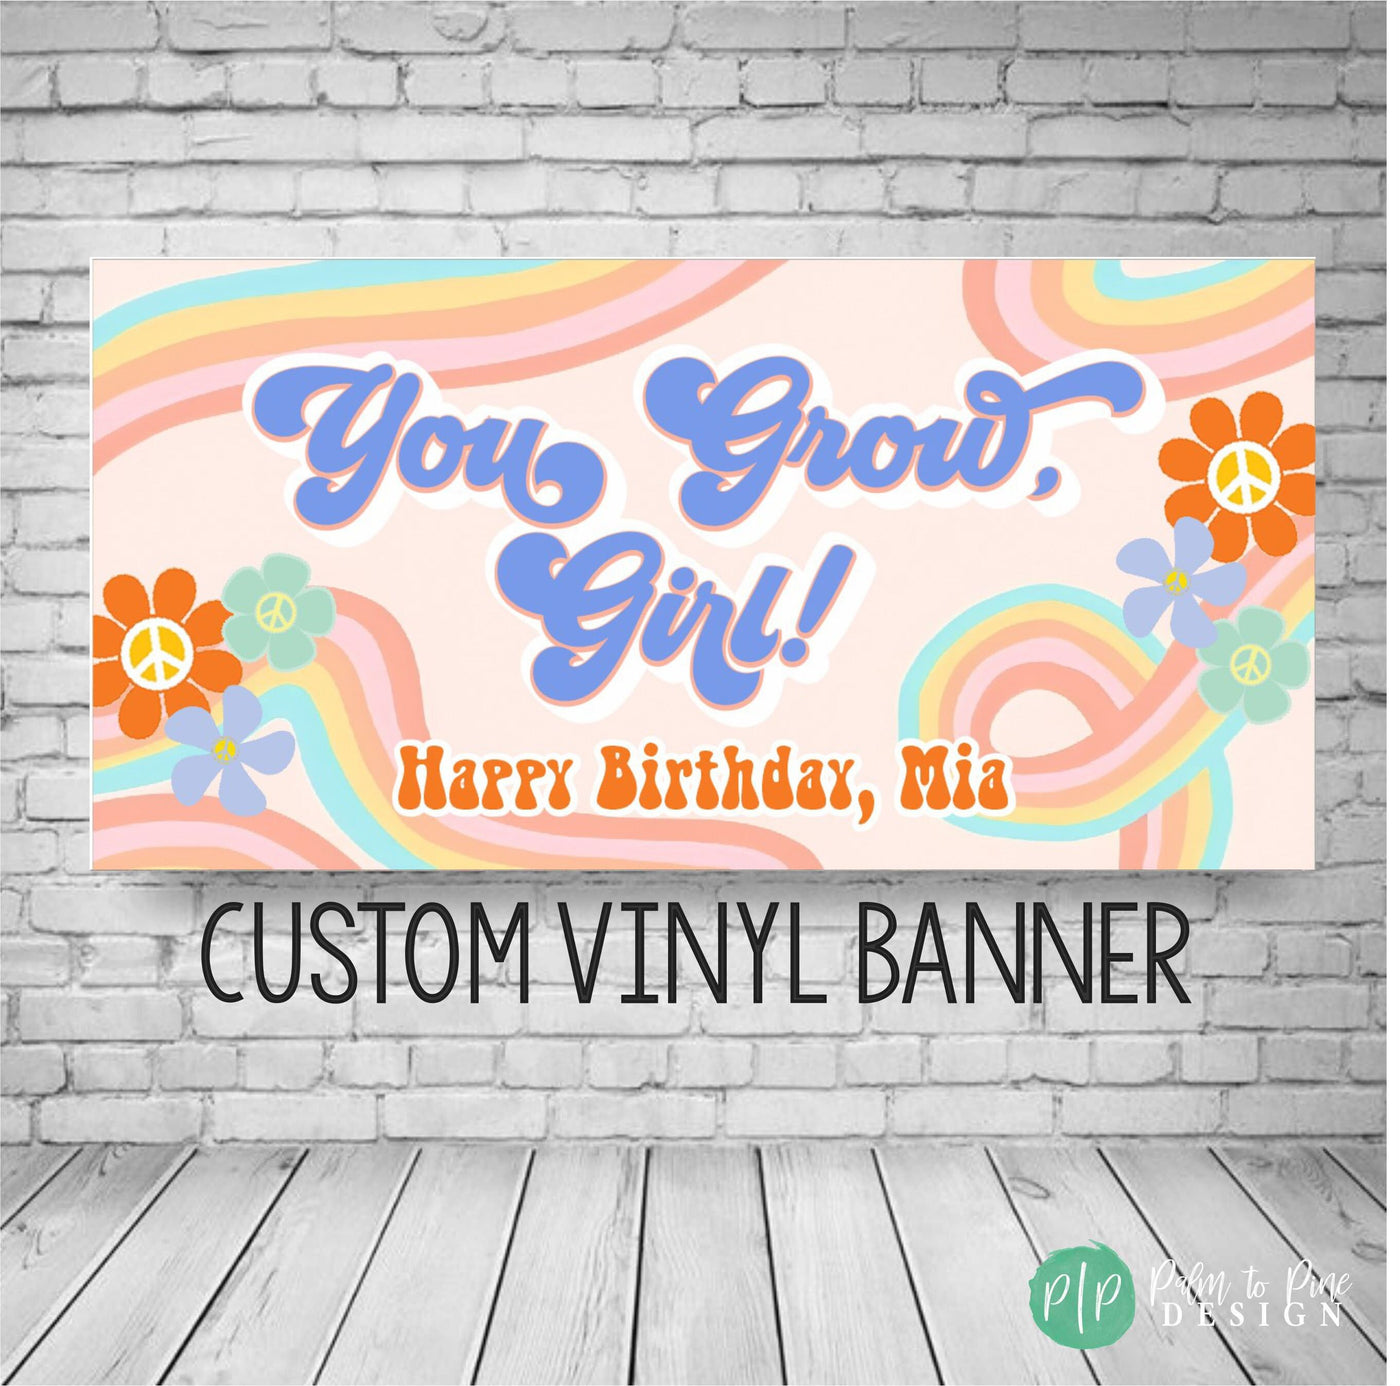 Groovy Birthday Banner, two groovy birthday, Hippie banner, Two Groovy Banner, Flower Child Birthday Decor, Groovy banner, groovy backdrop